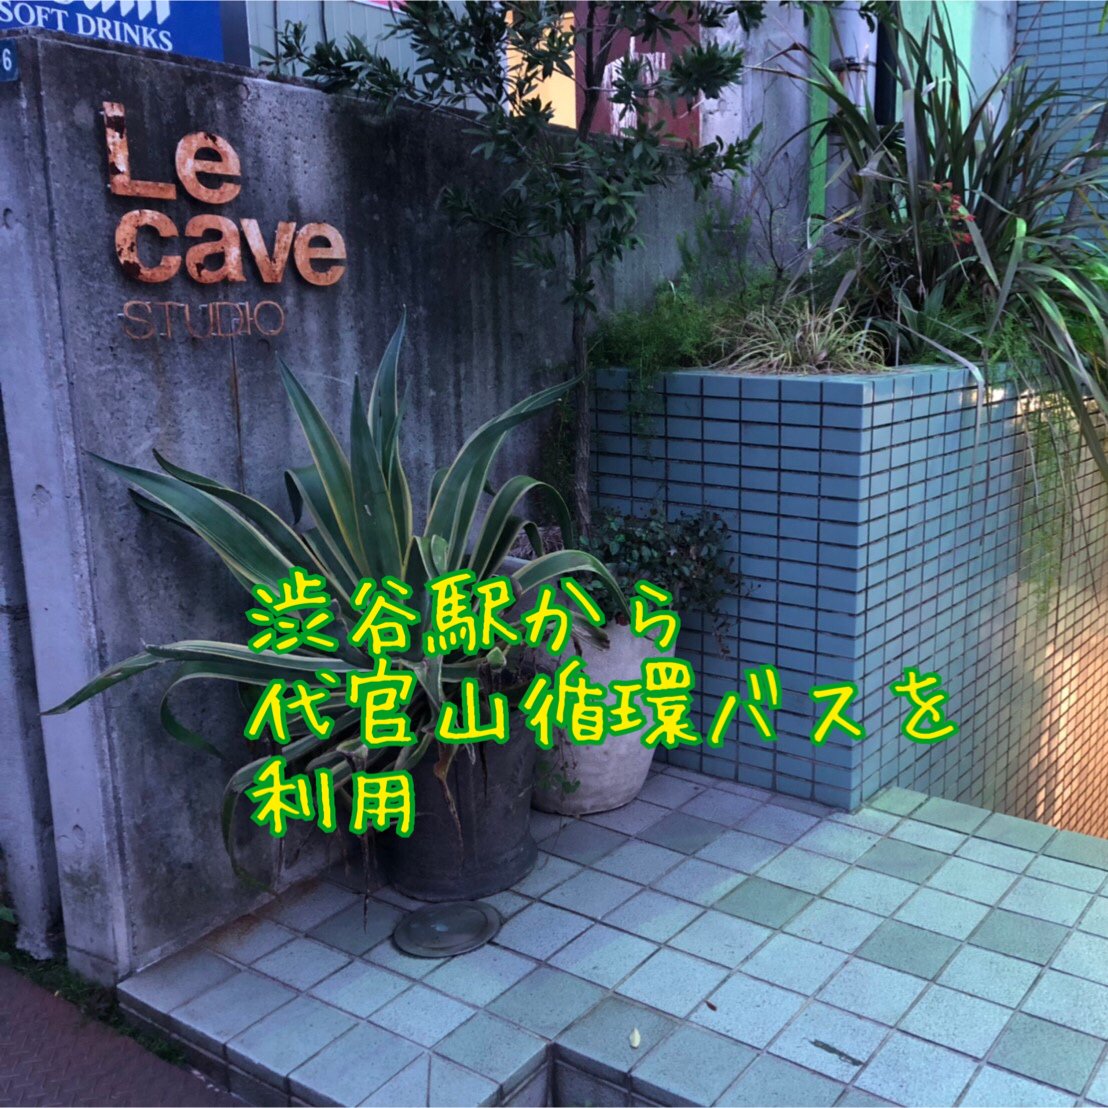 Le Cave Studio への行き方 渋谷駅からバスver